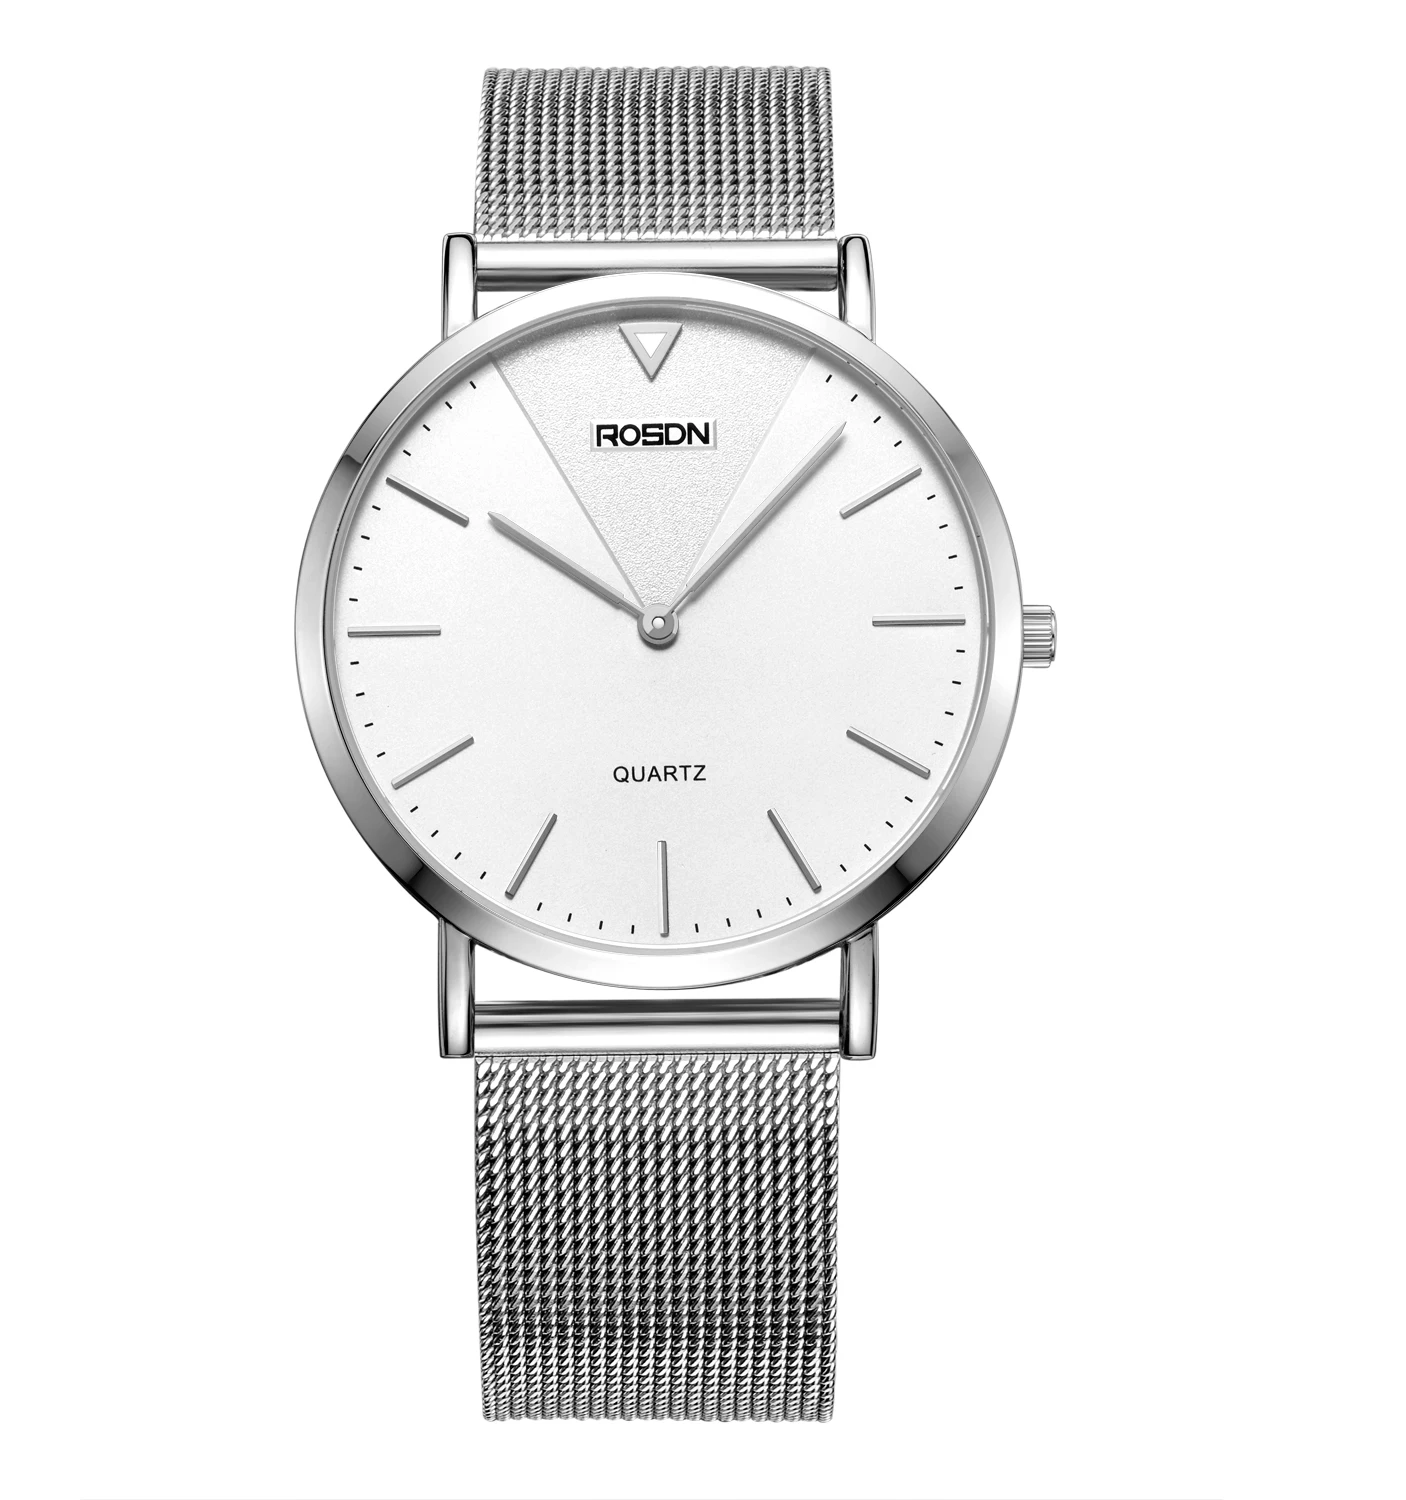 Oem brand stainless steel quartz watches men ladies quartz gold watch diamond quartz watches (1600487473109)